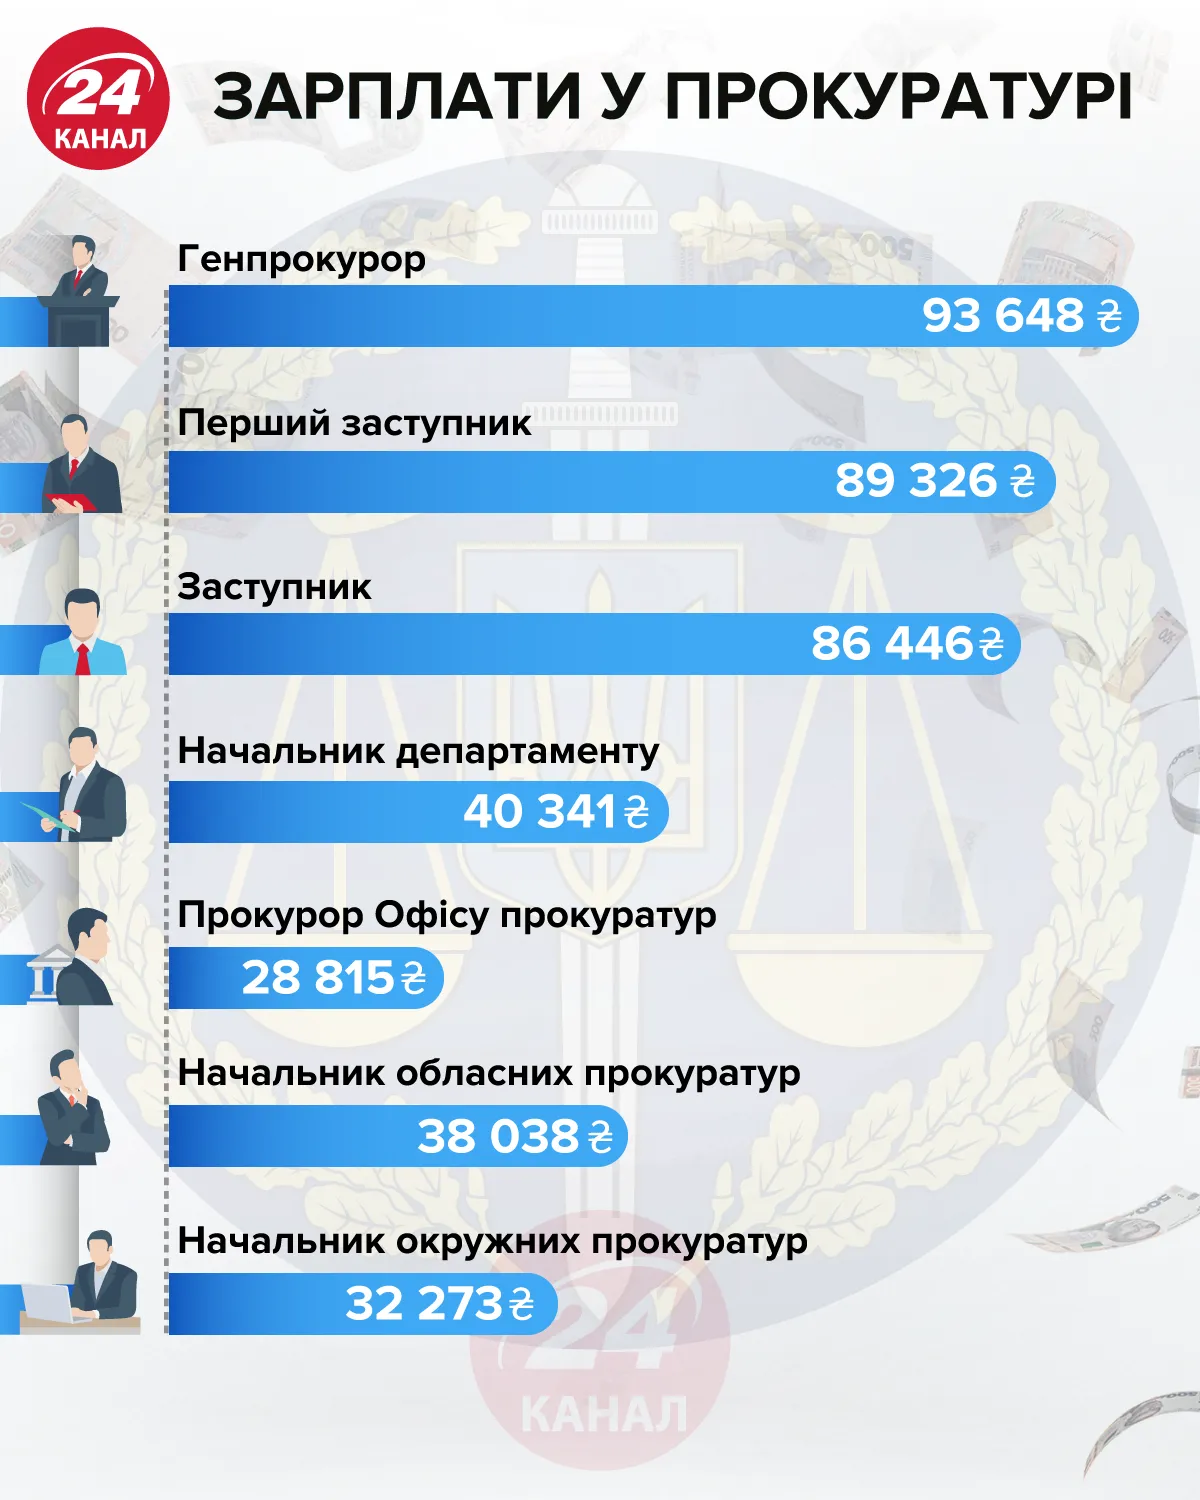 зарплаты в прокуратуре инфографика 24 канал